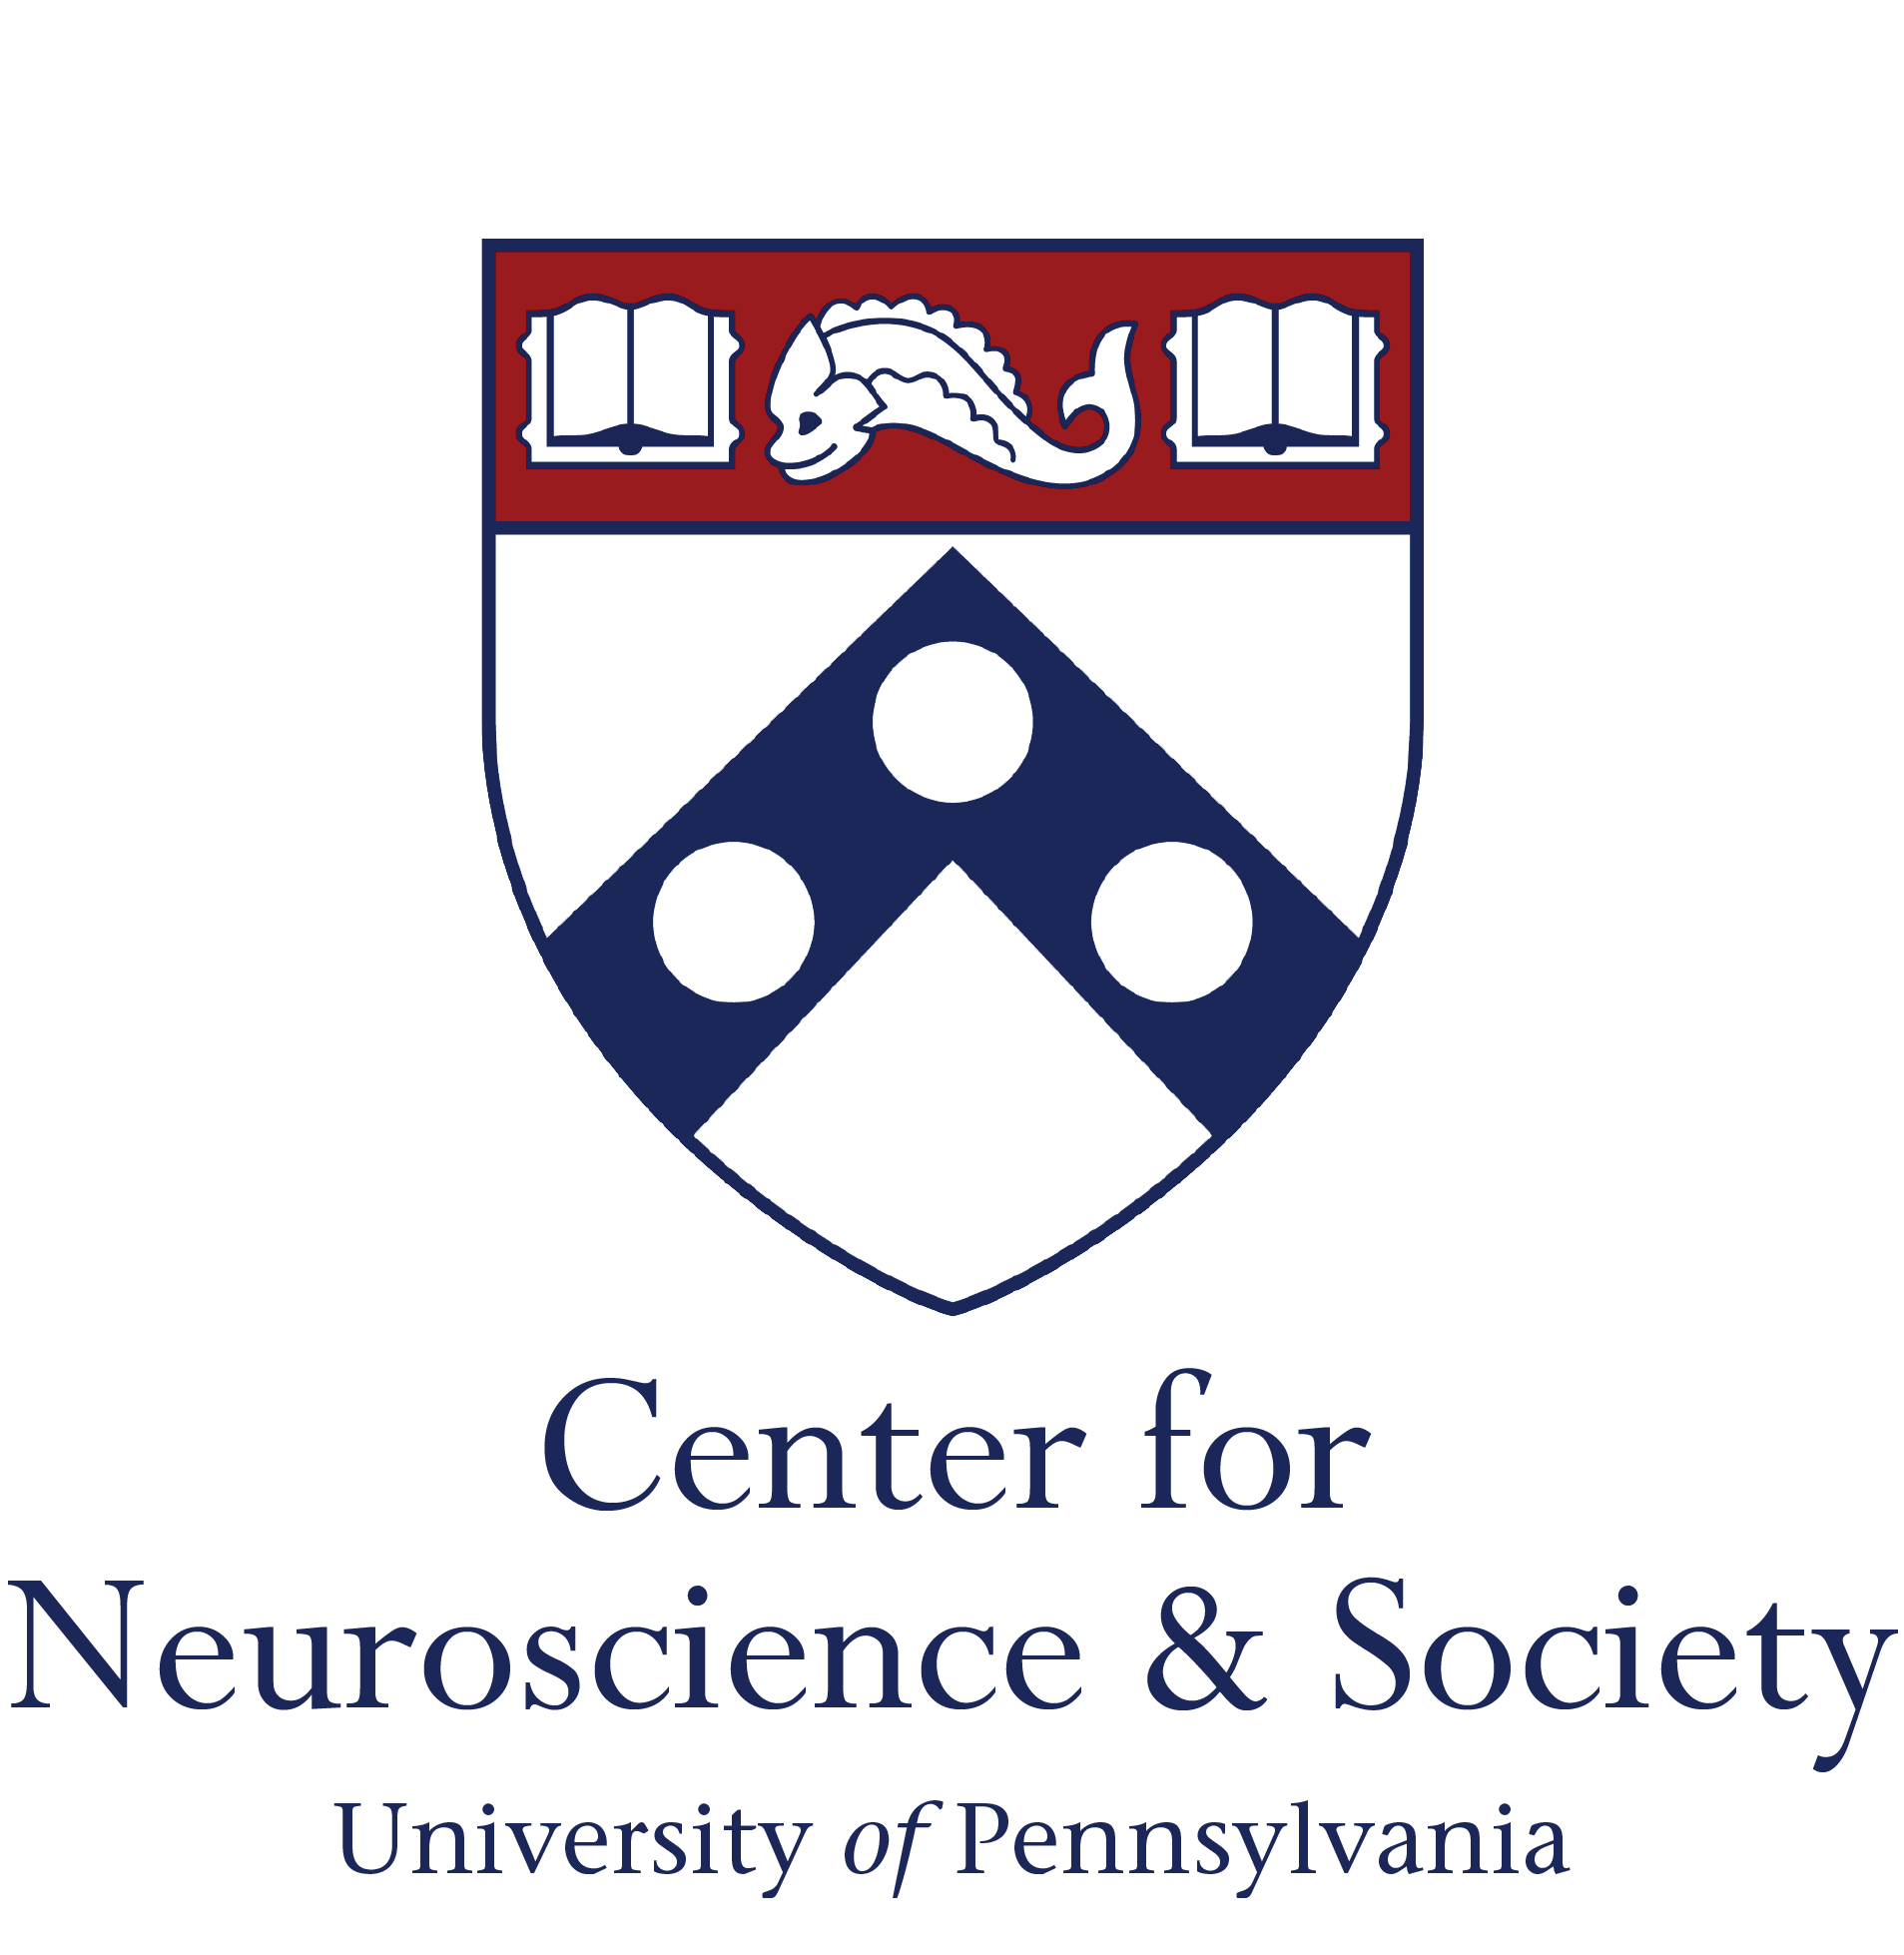 Center for Neuroscience & Society, University of Pennsylvania